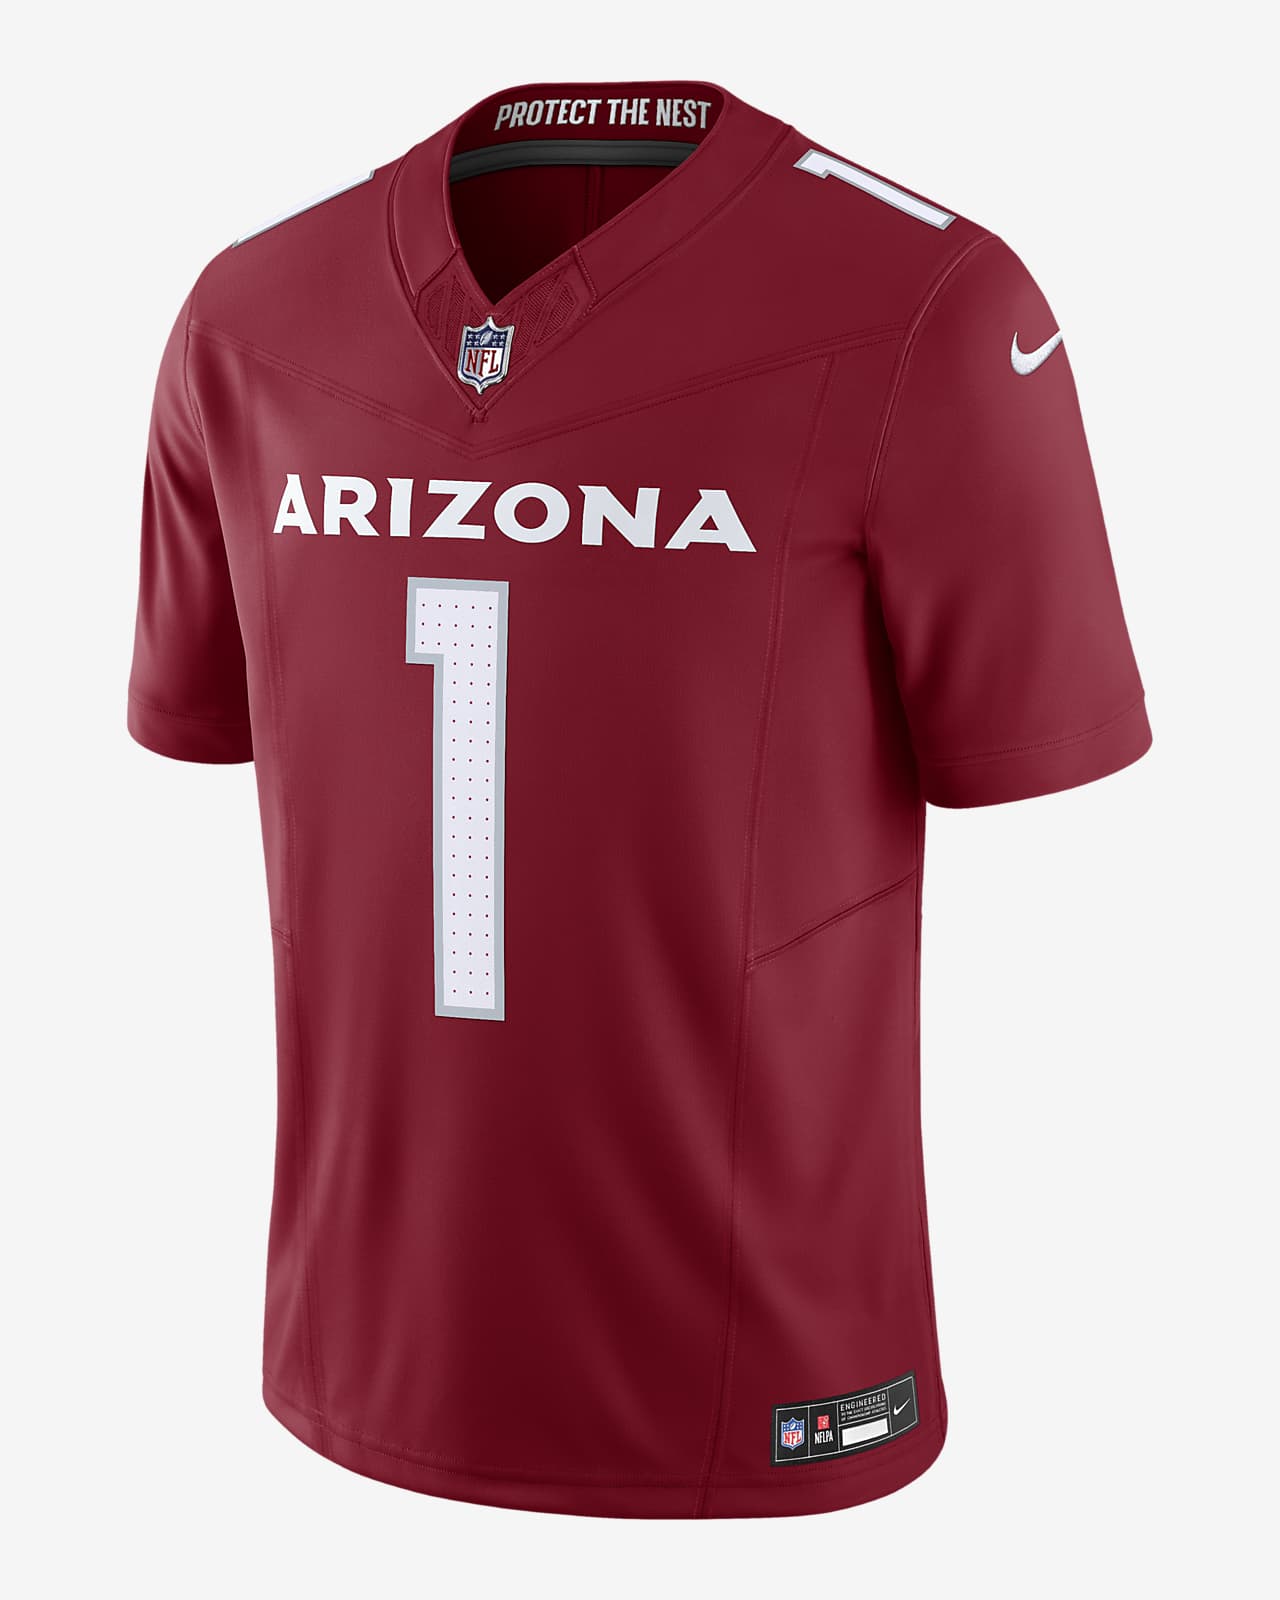 Jersey de fútbol americano Nike Dri-FIT de la NFL Limited para hombre Kyler Murray Arizona Cardinals